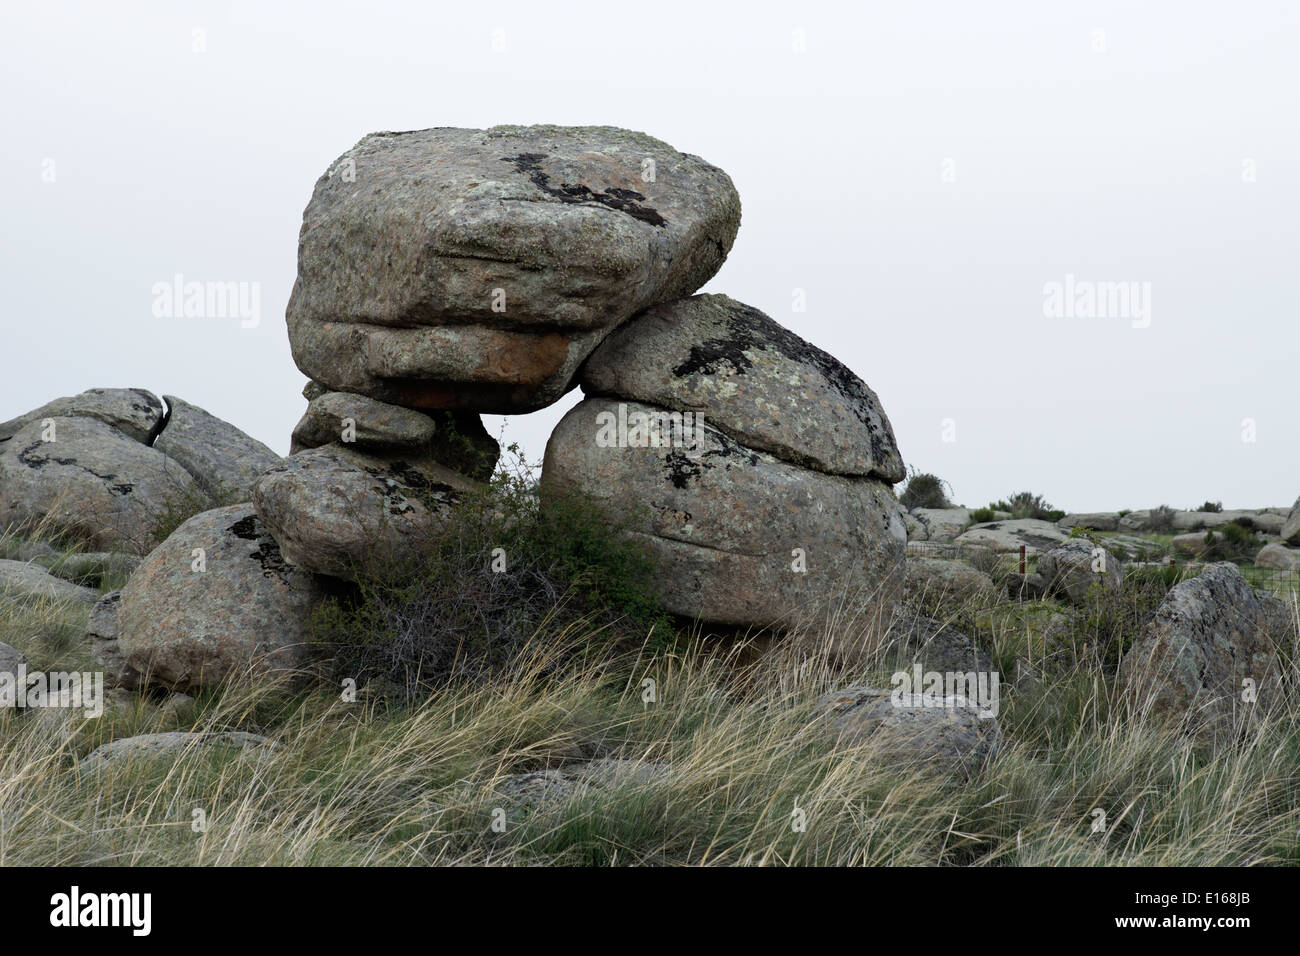 Ávila España glaciares de roca errática boulder conformación granítica sierra de avila stone Foto de stock